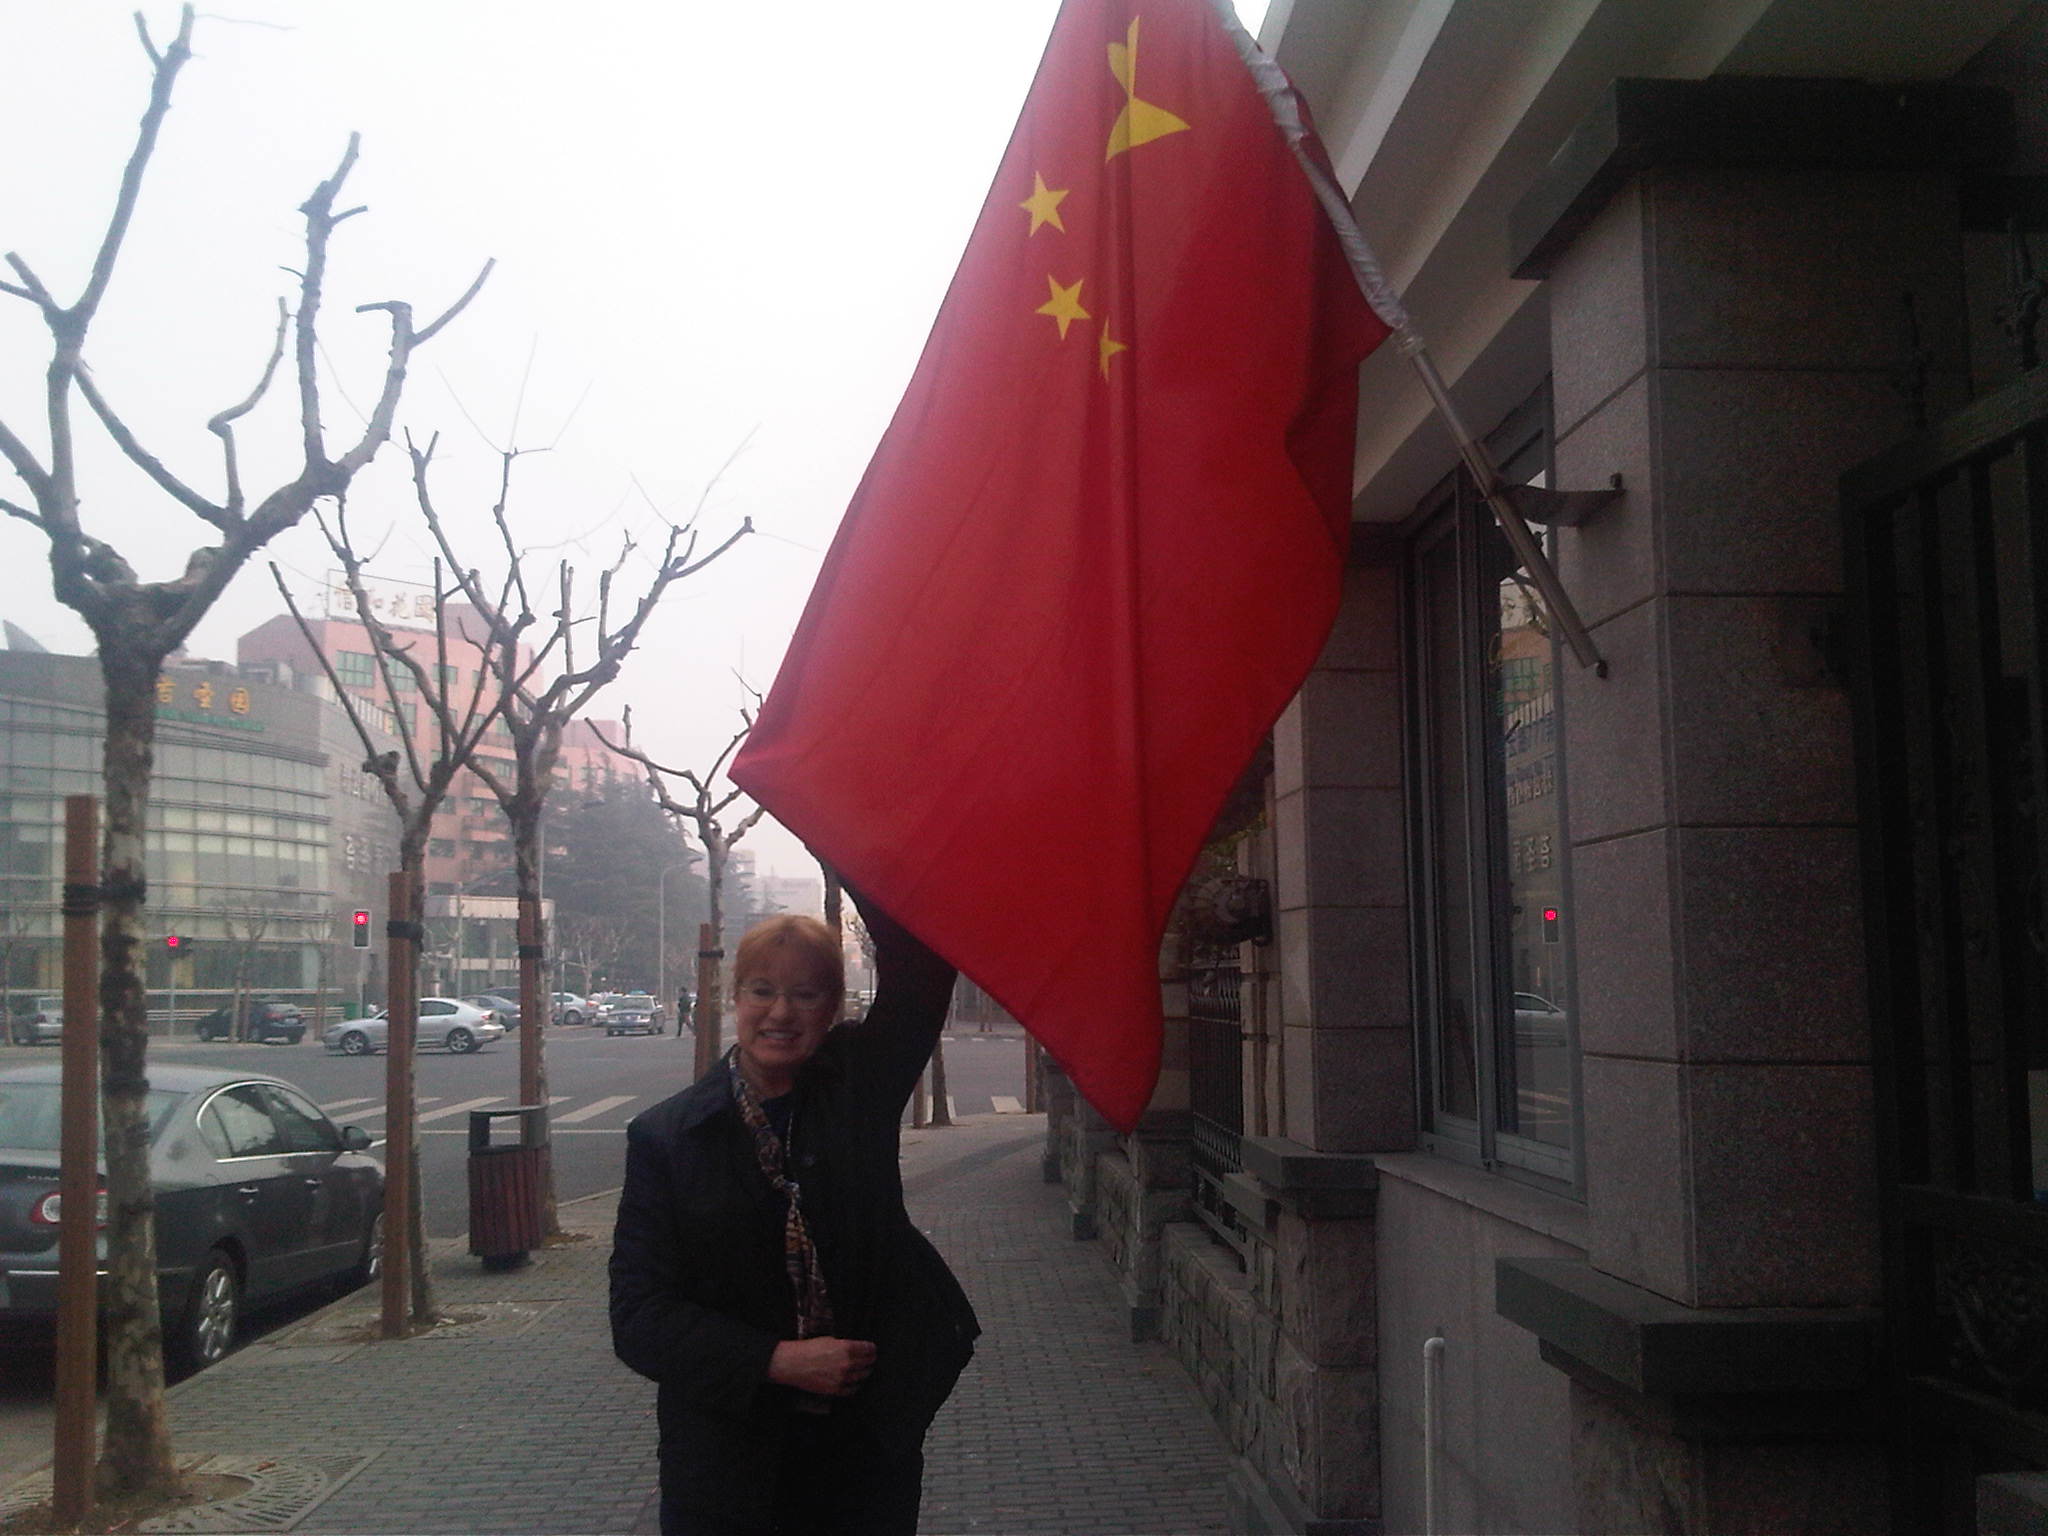 Debbie under Chinese flag